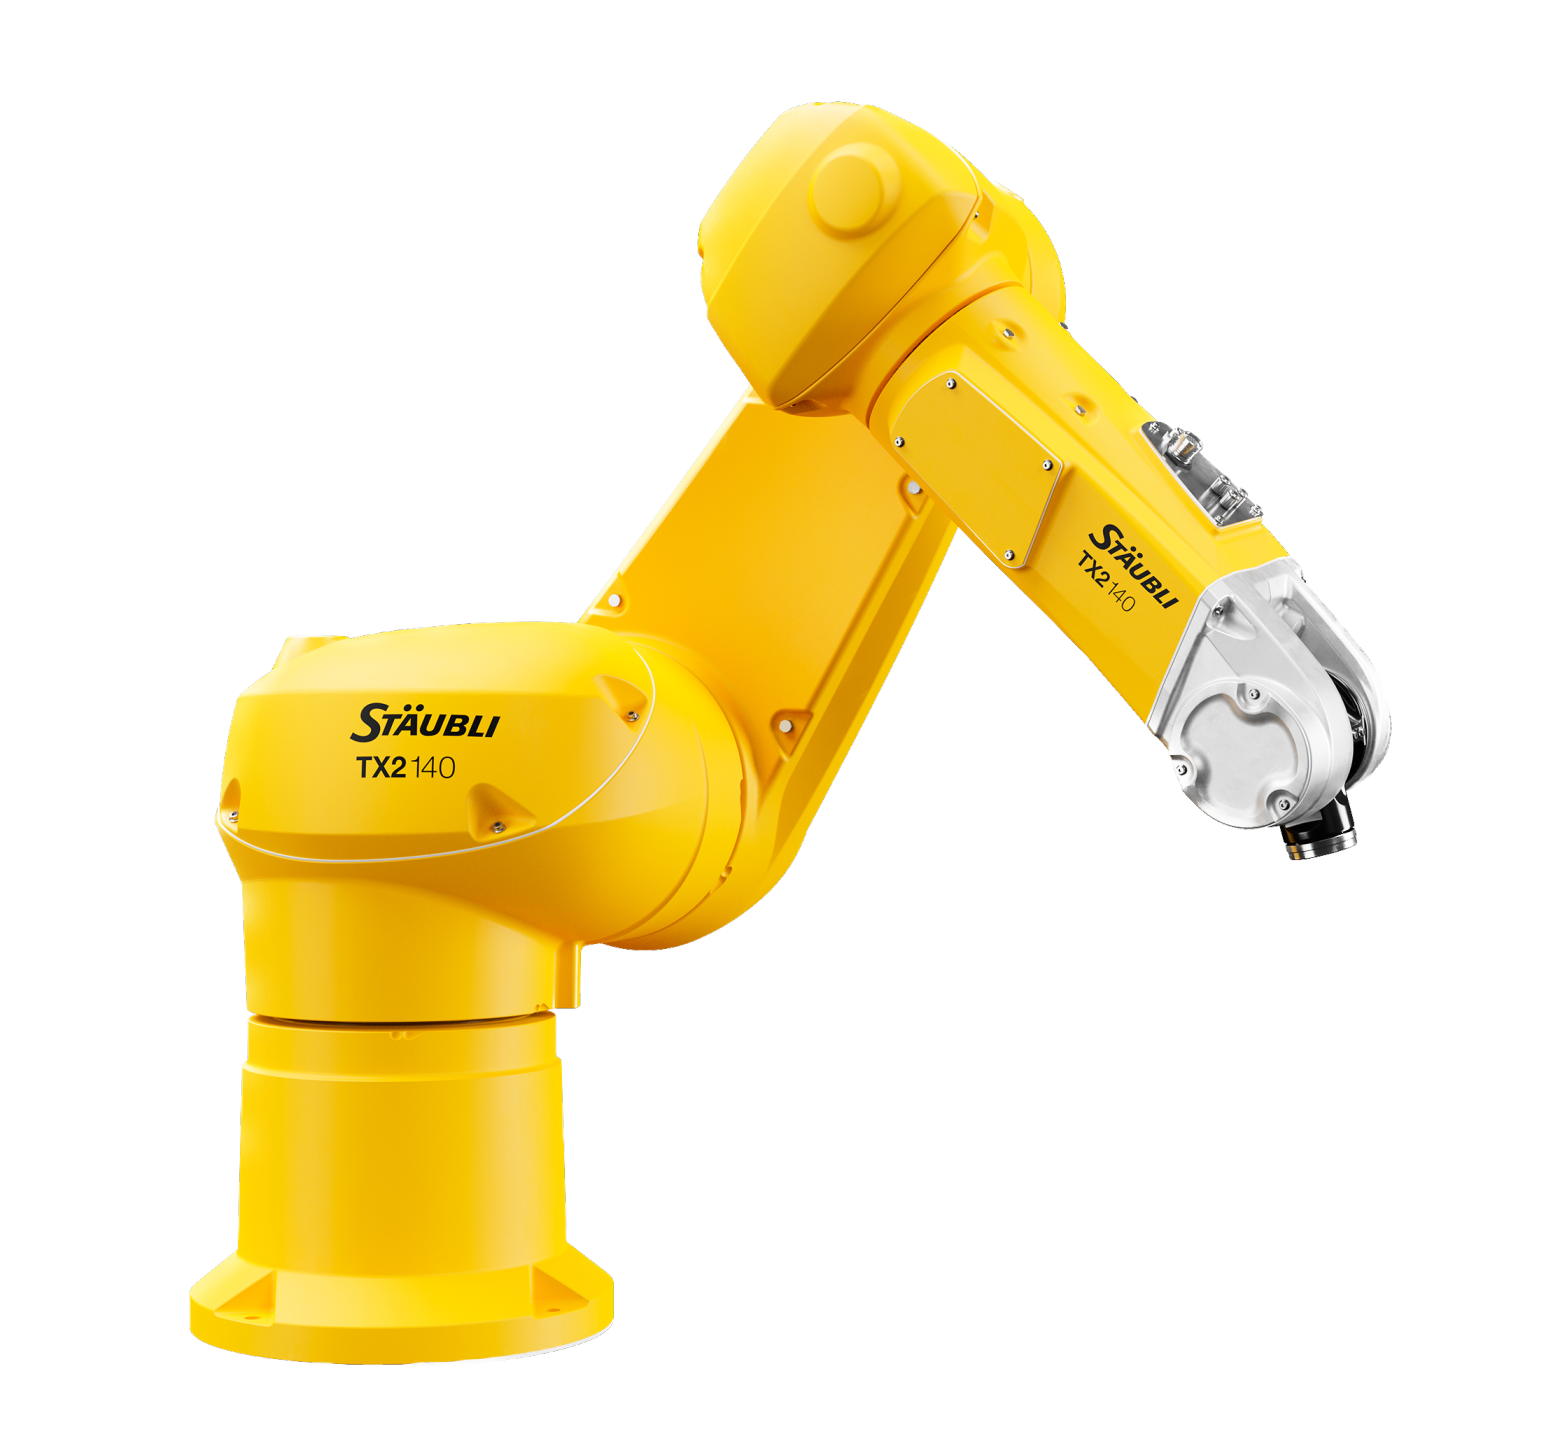 Industrial Robot Staubli TX2-140